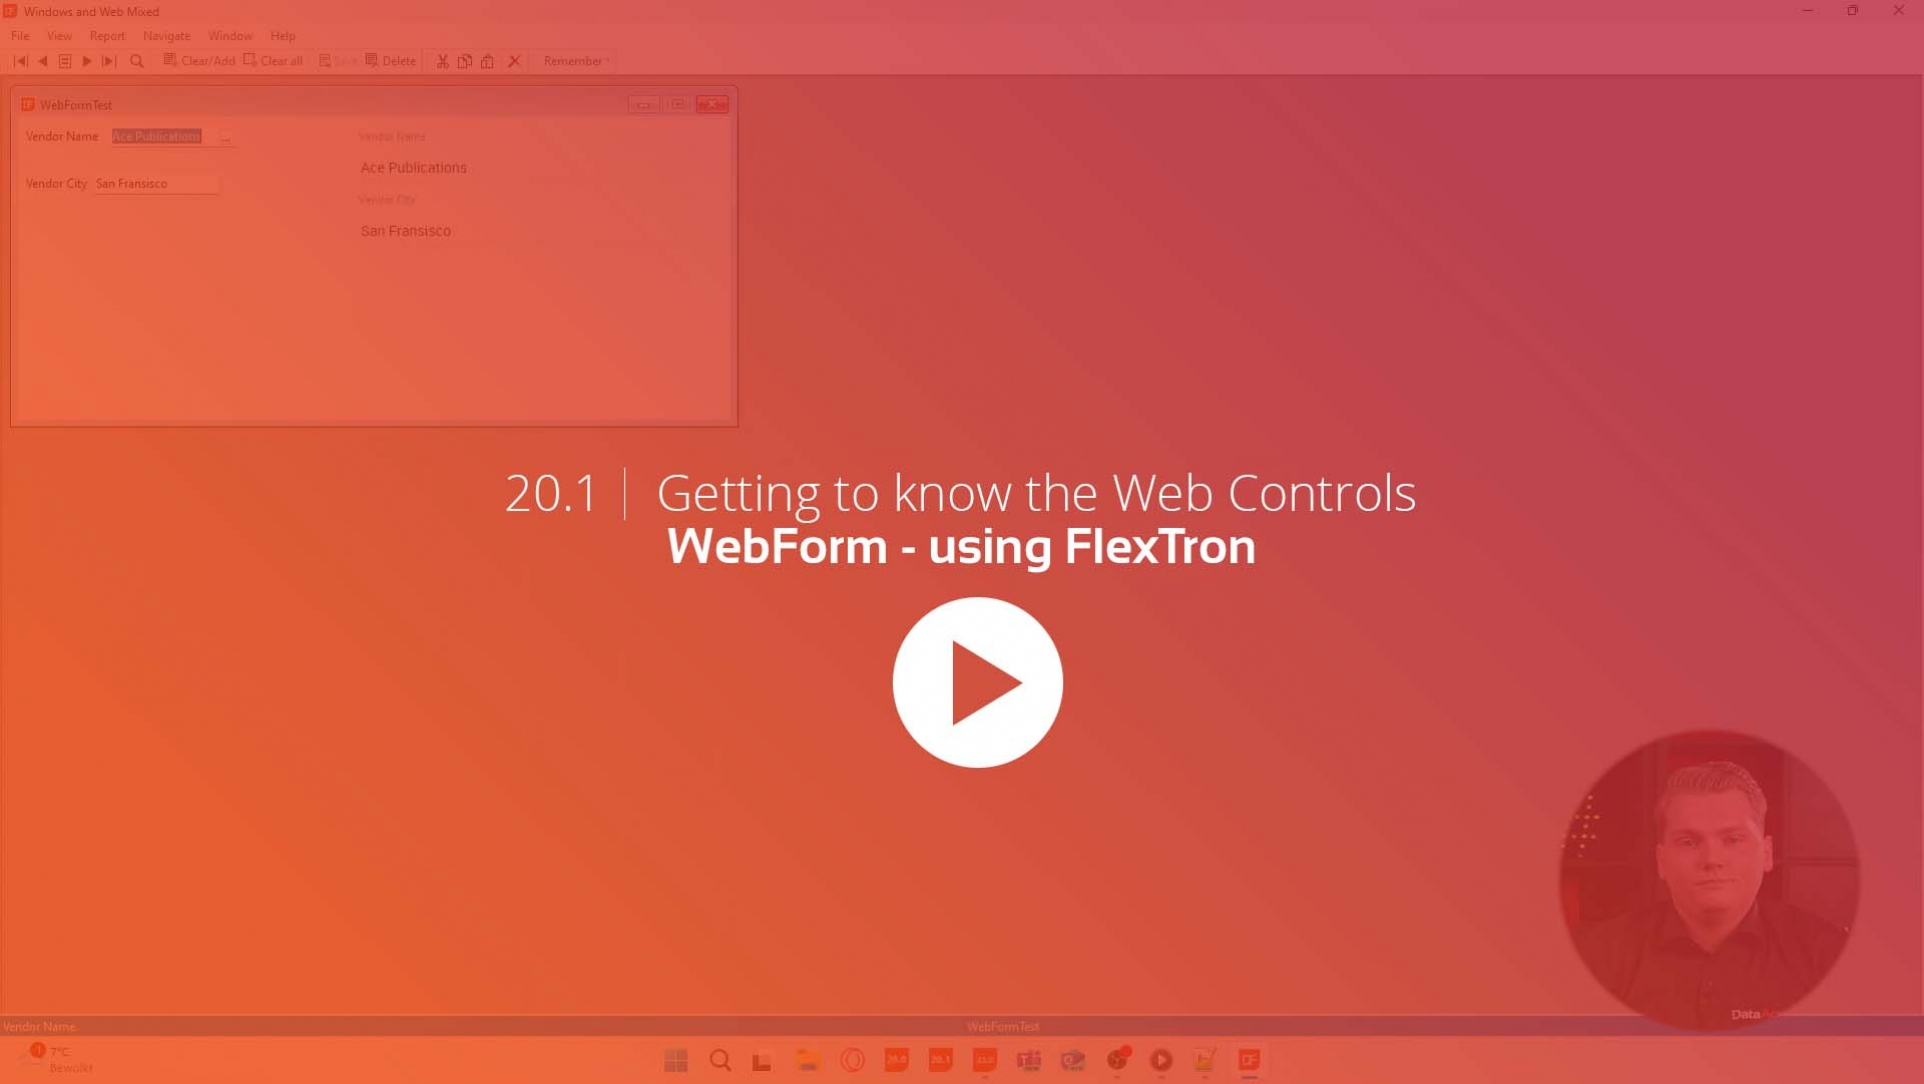 WebForm in Windows applications using FlexTron